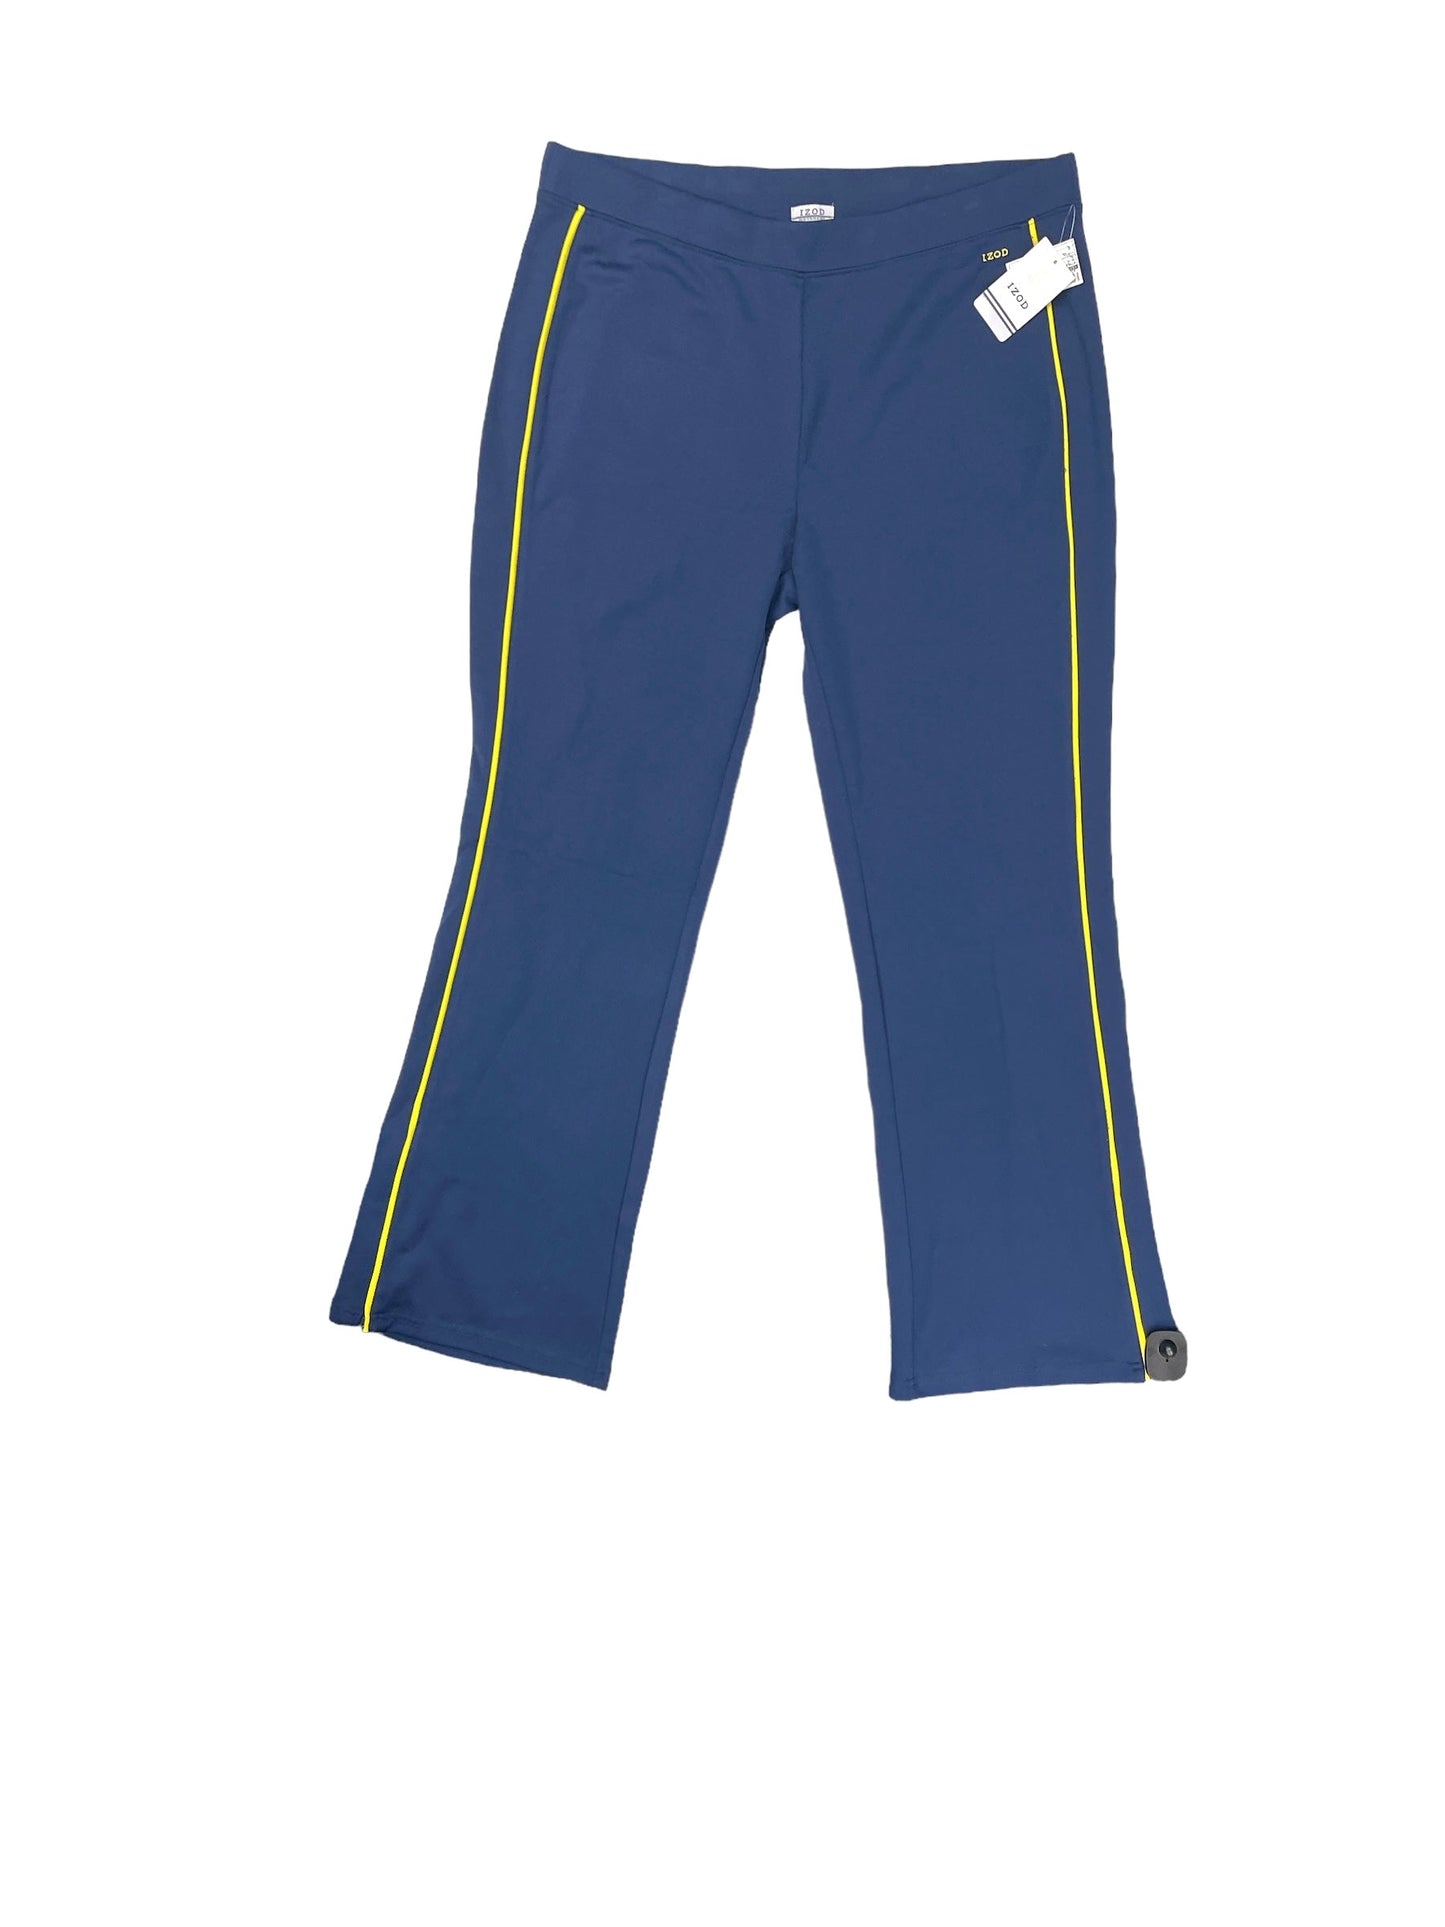 Blue Athletic Pants Izod, Size Xl